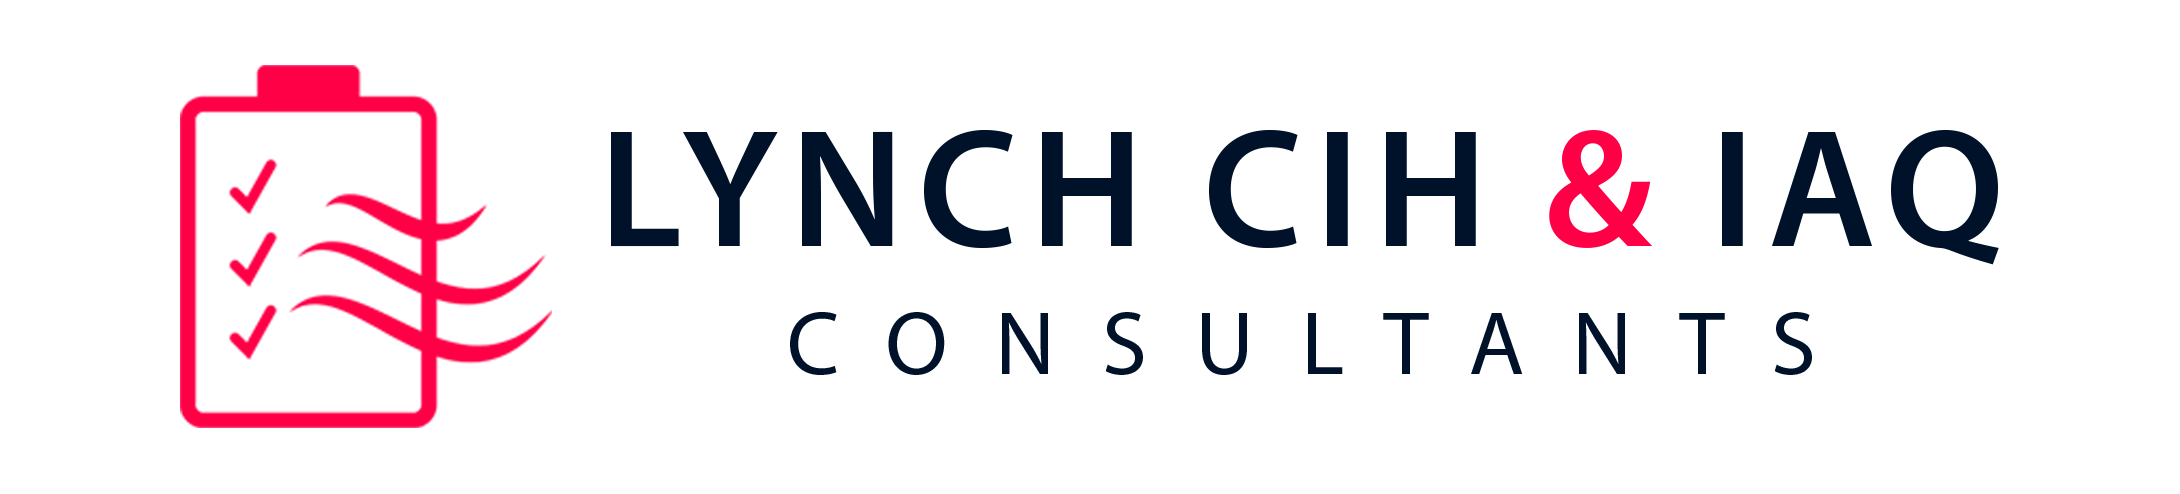 Lynch CIH & IAQ Consultants, LLC Logo